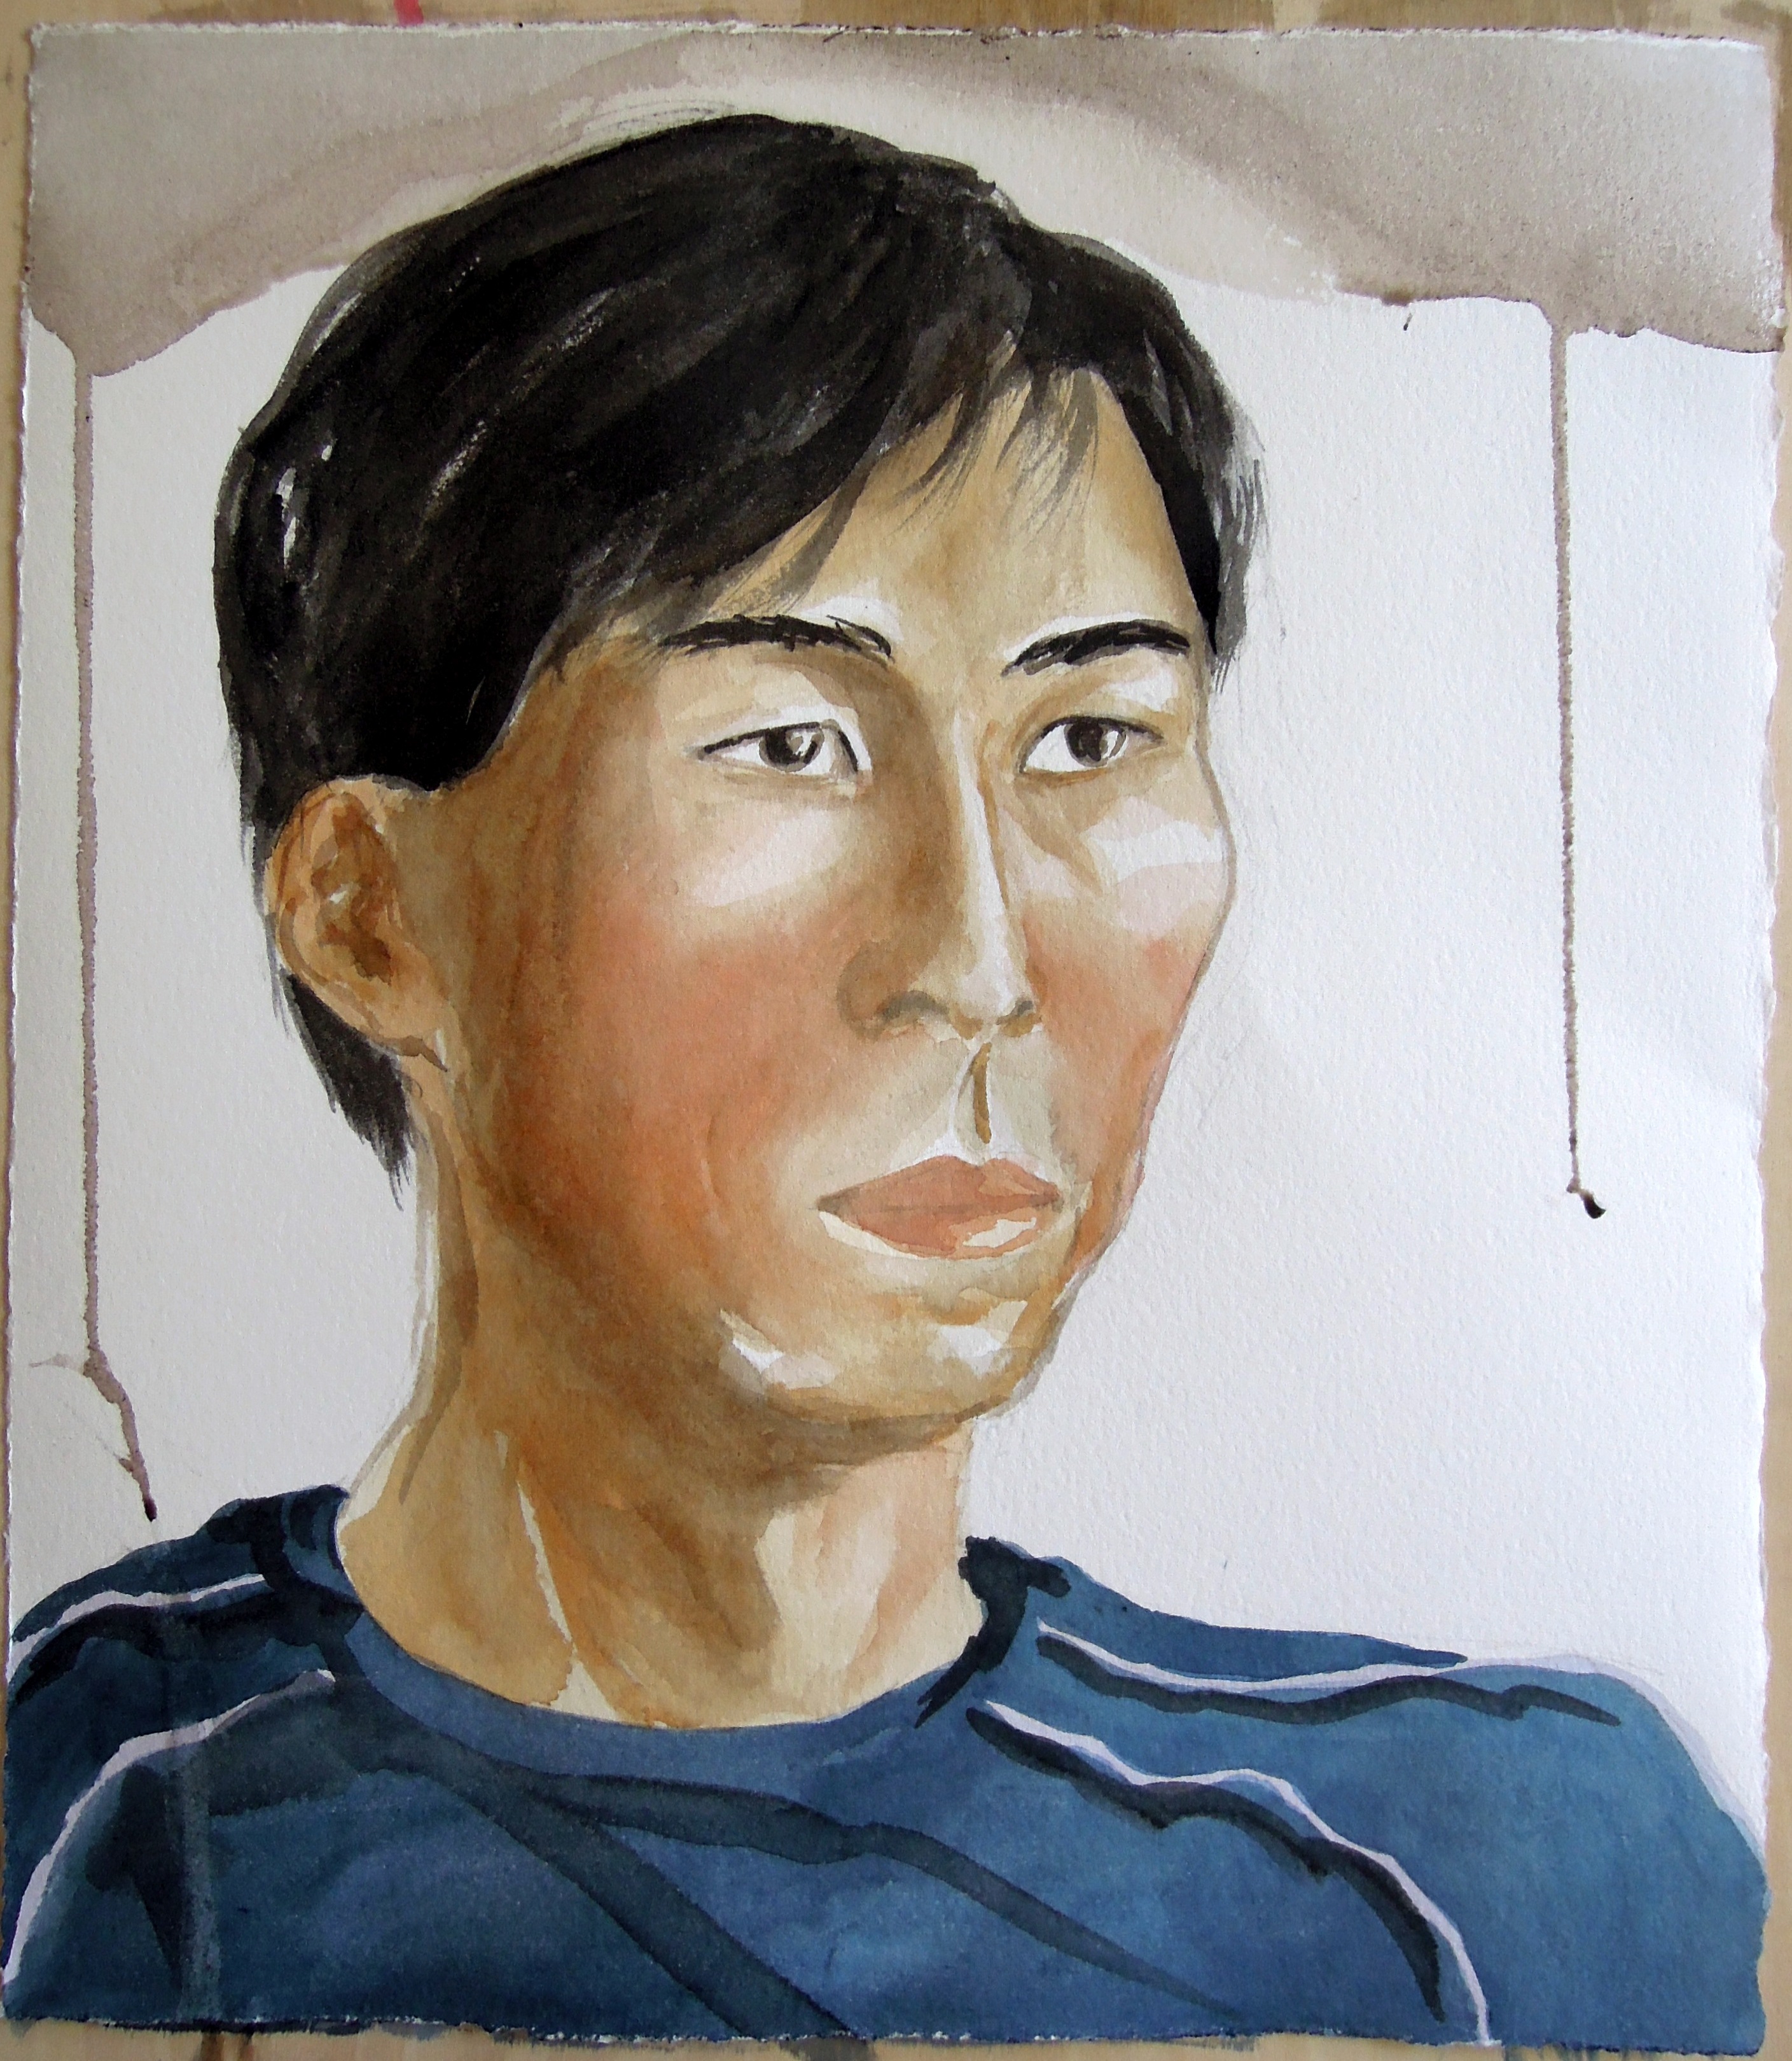 Portrait of Cliff in watercolor, 2015